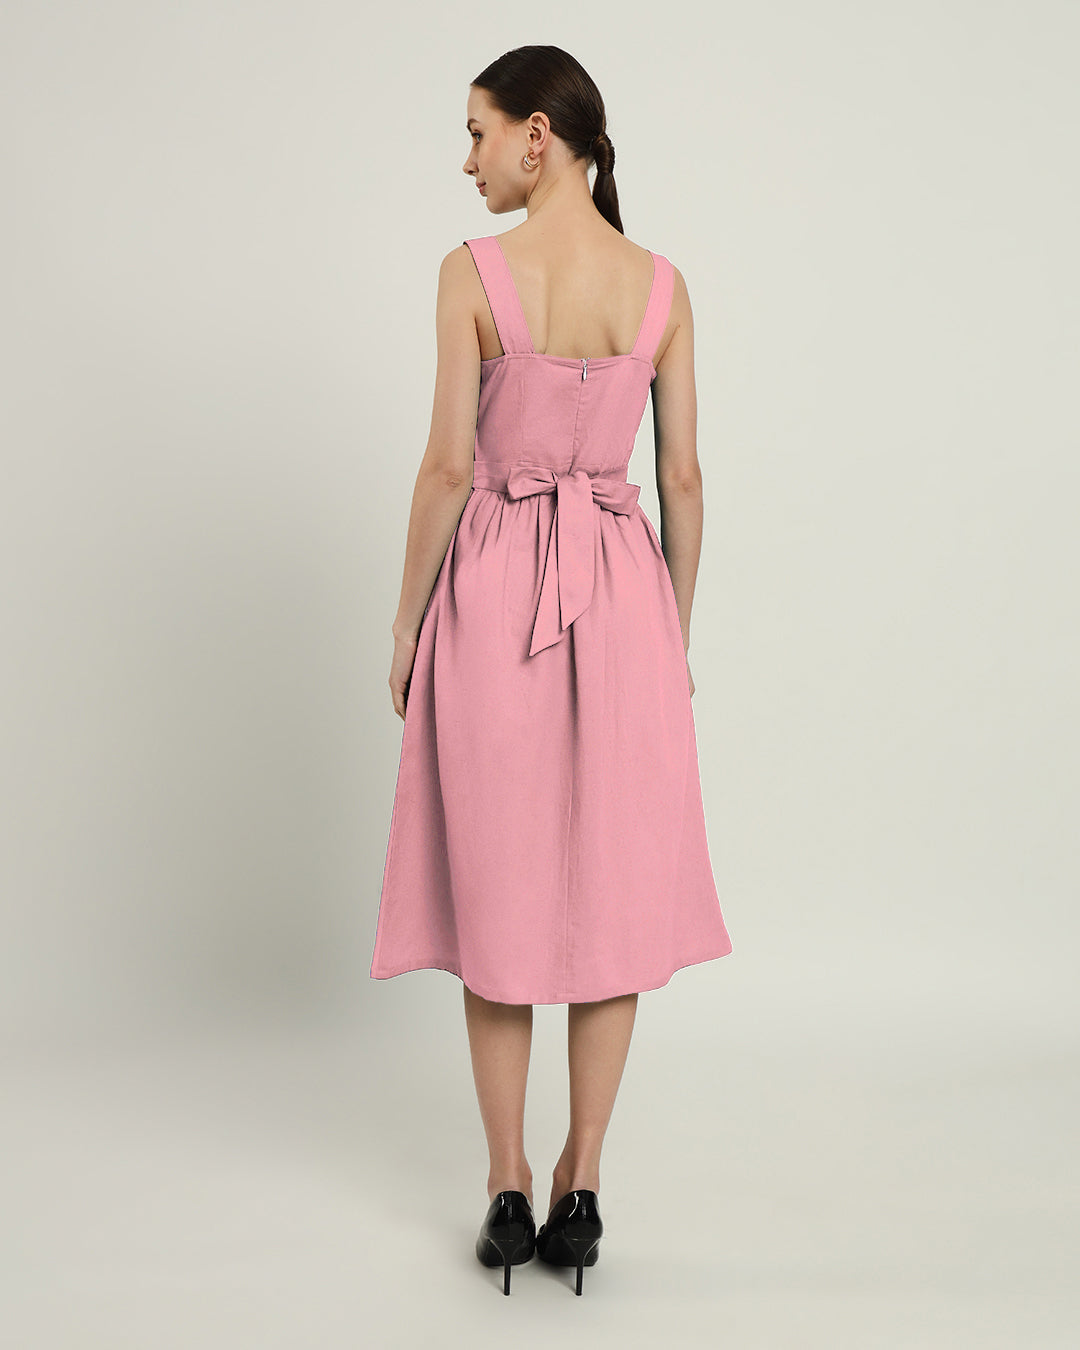 The Mihara Fondant Pink Dress